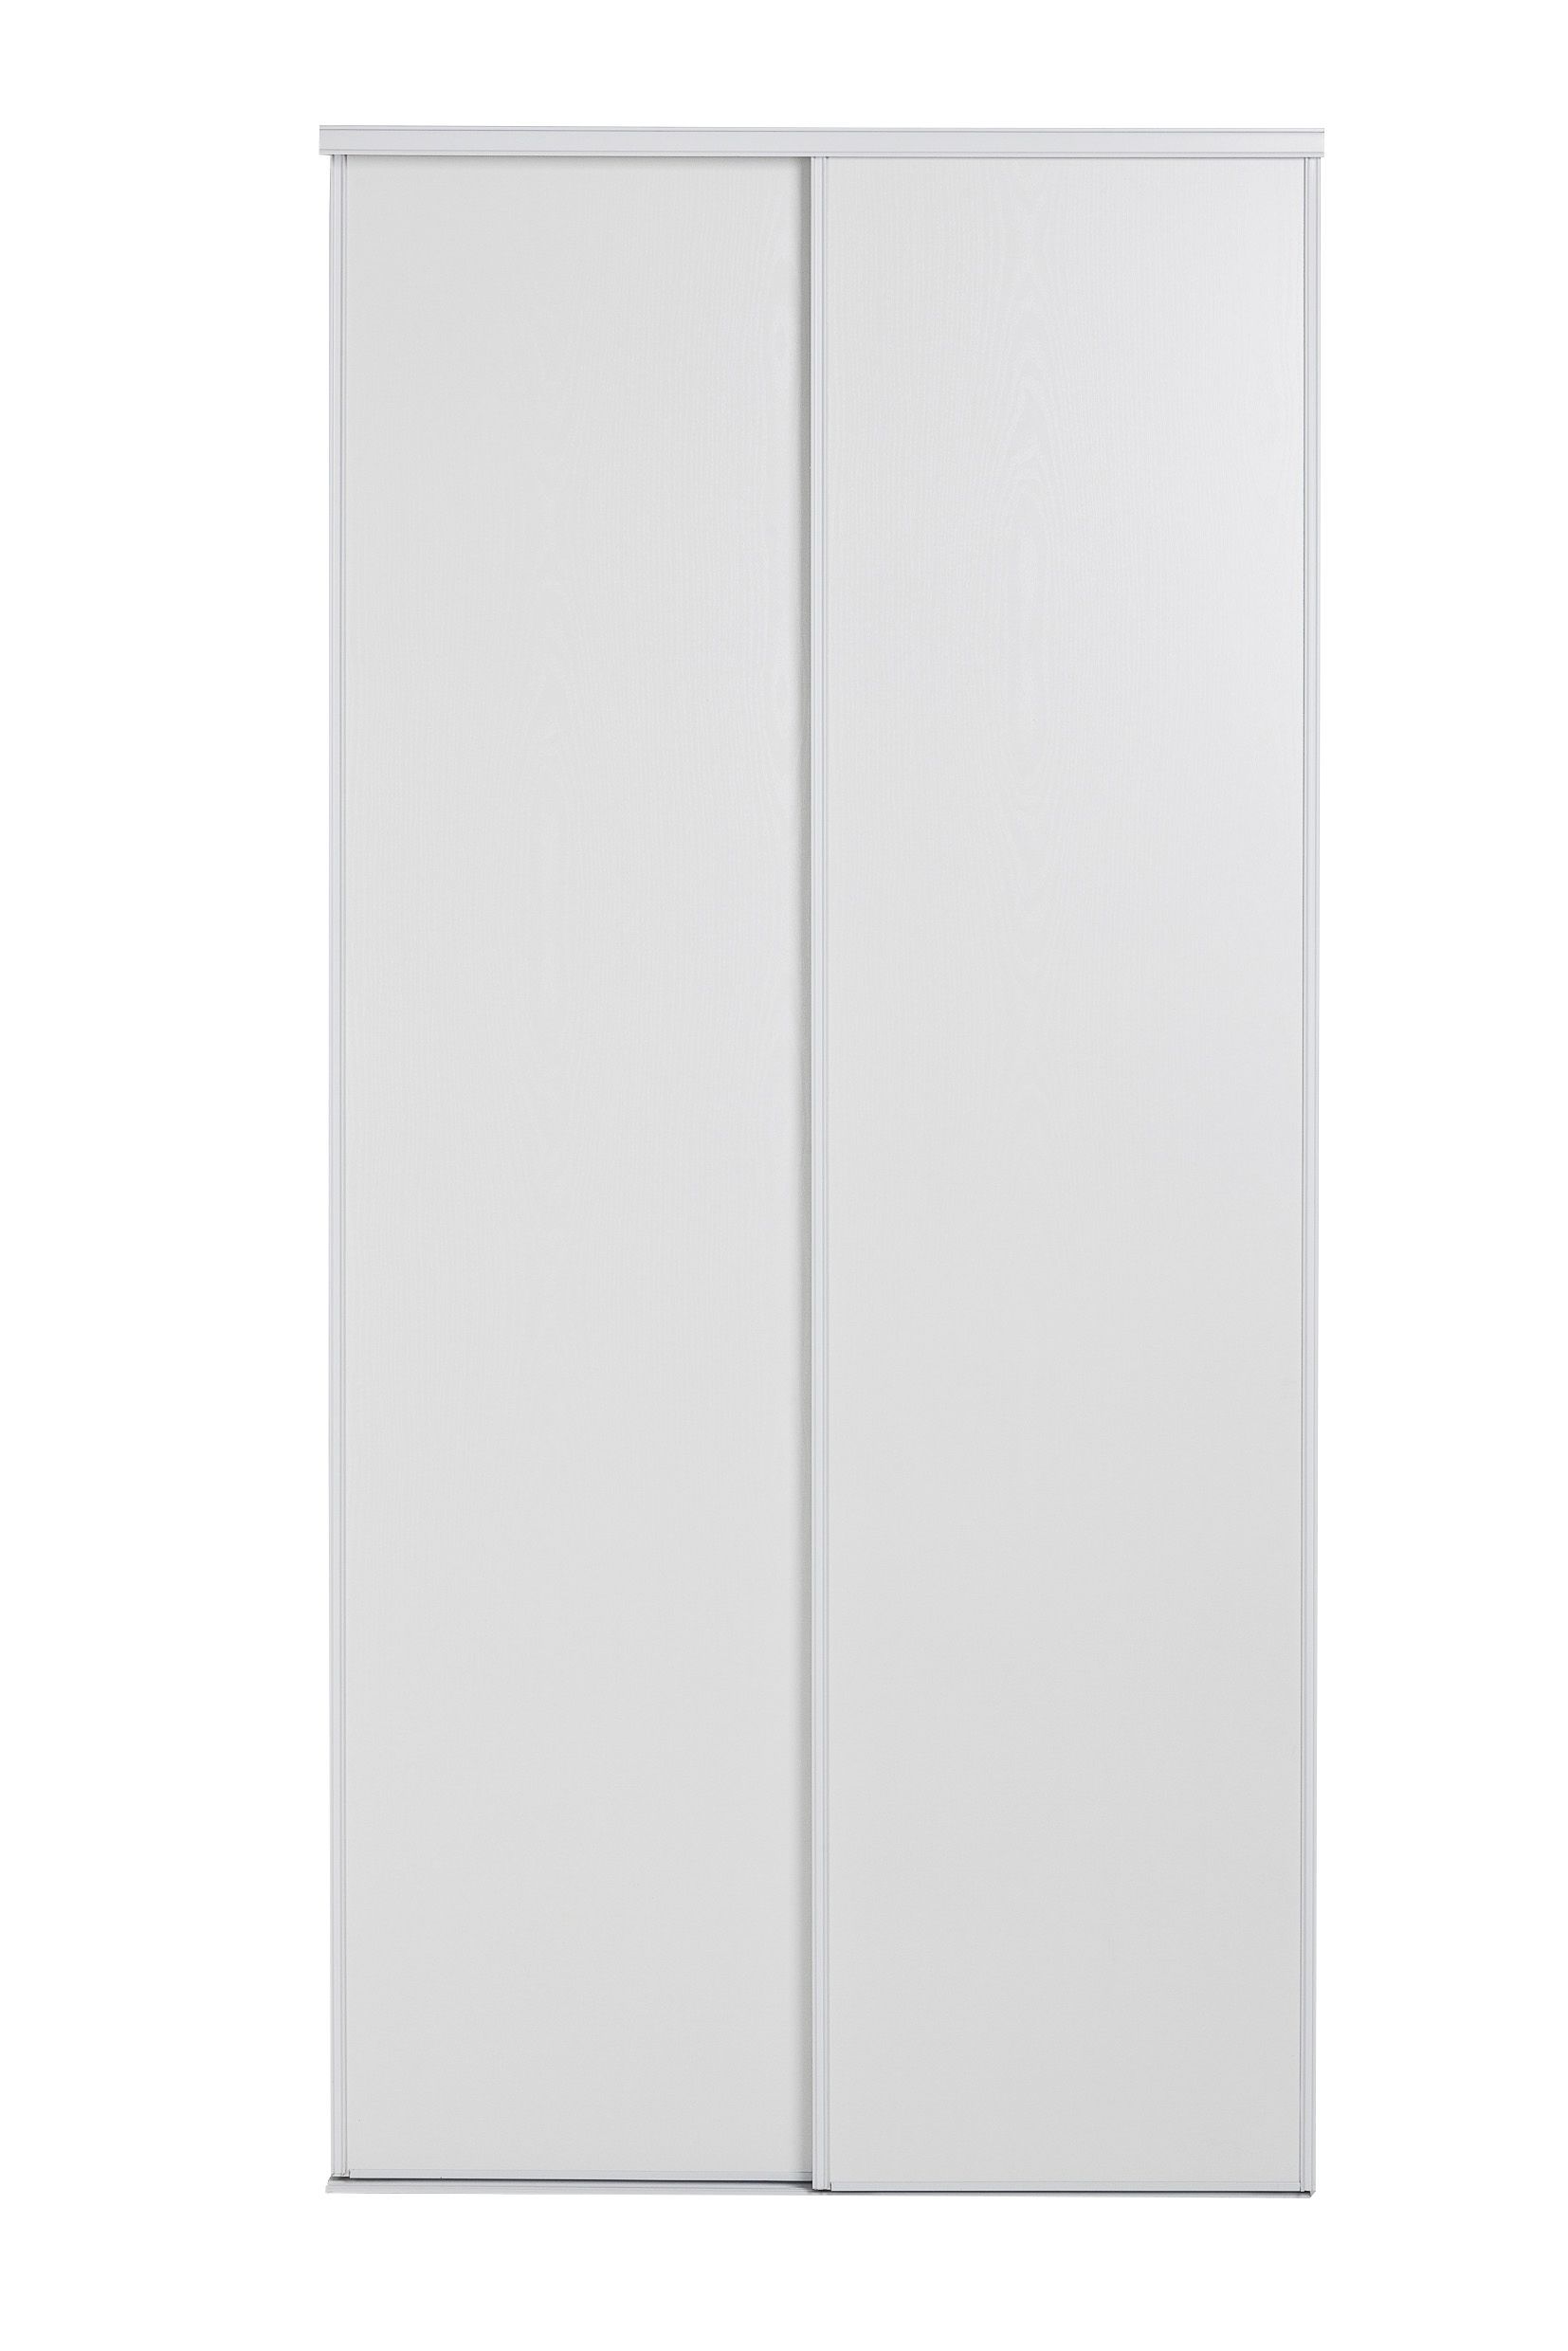 Blizz White 2 door Sliding Wardrobe Door kit (H)2260mm (W)1200mm